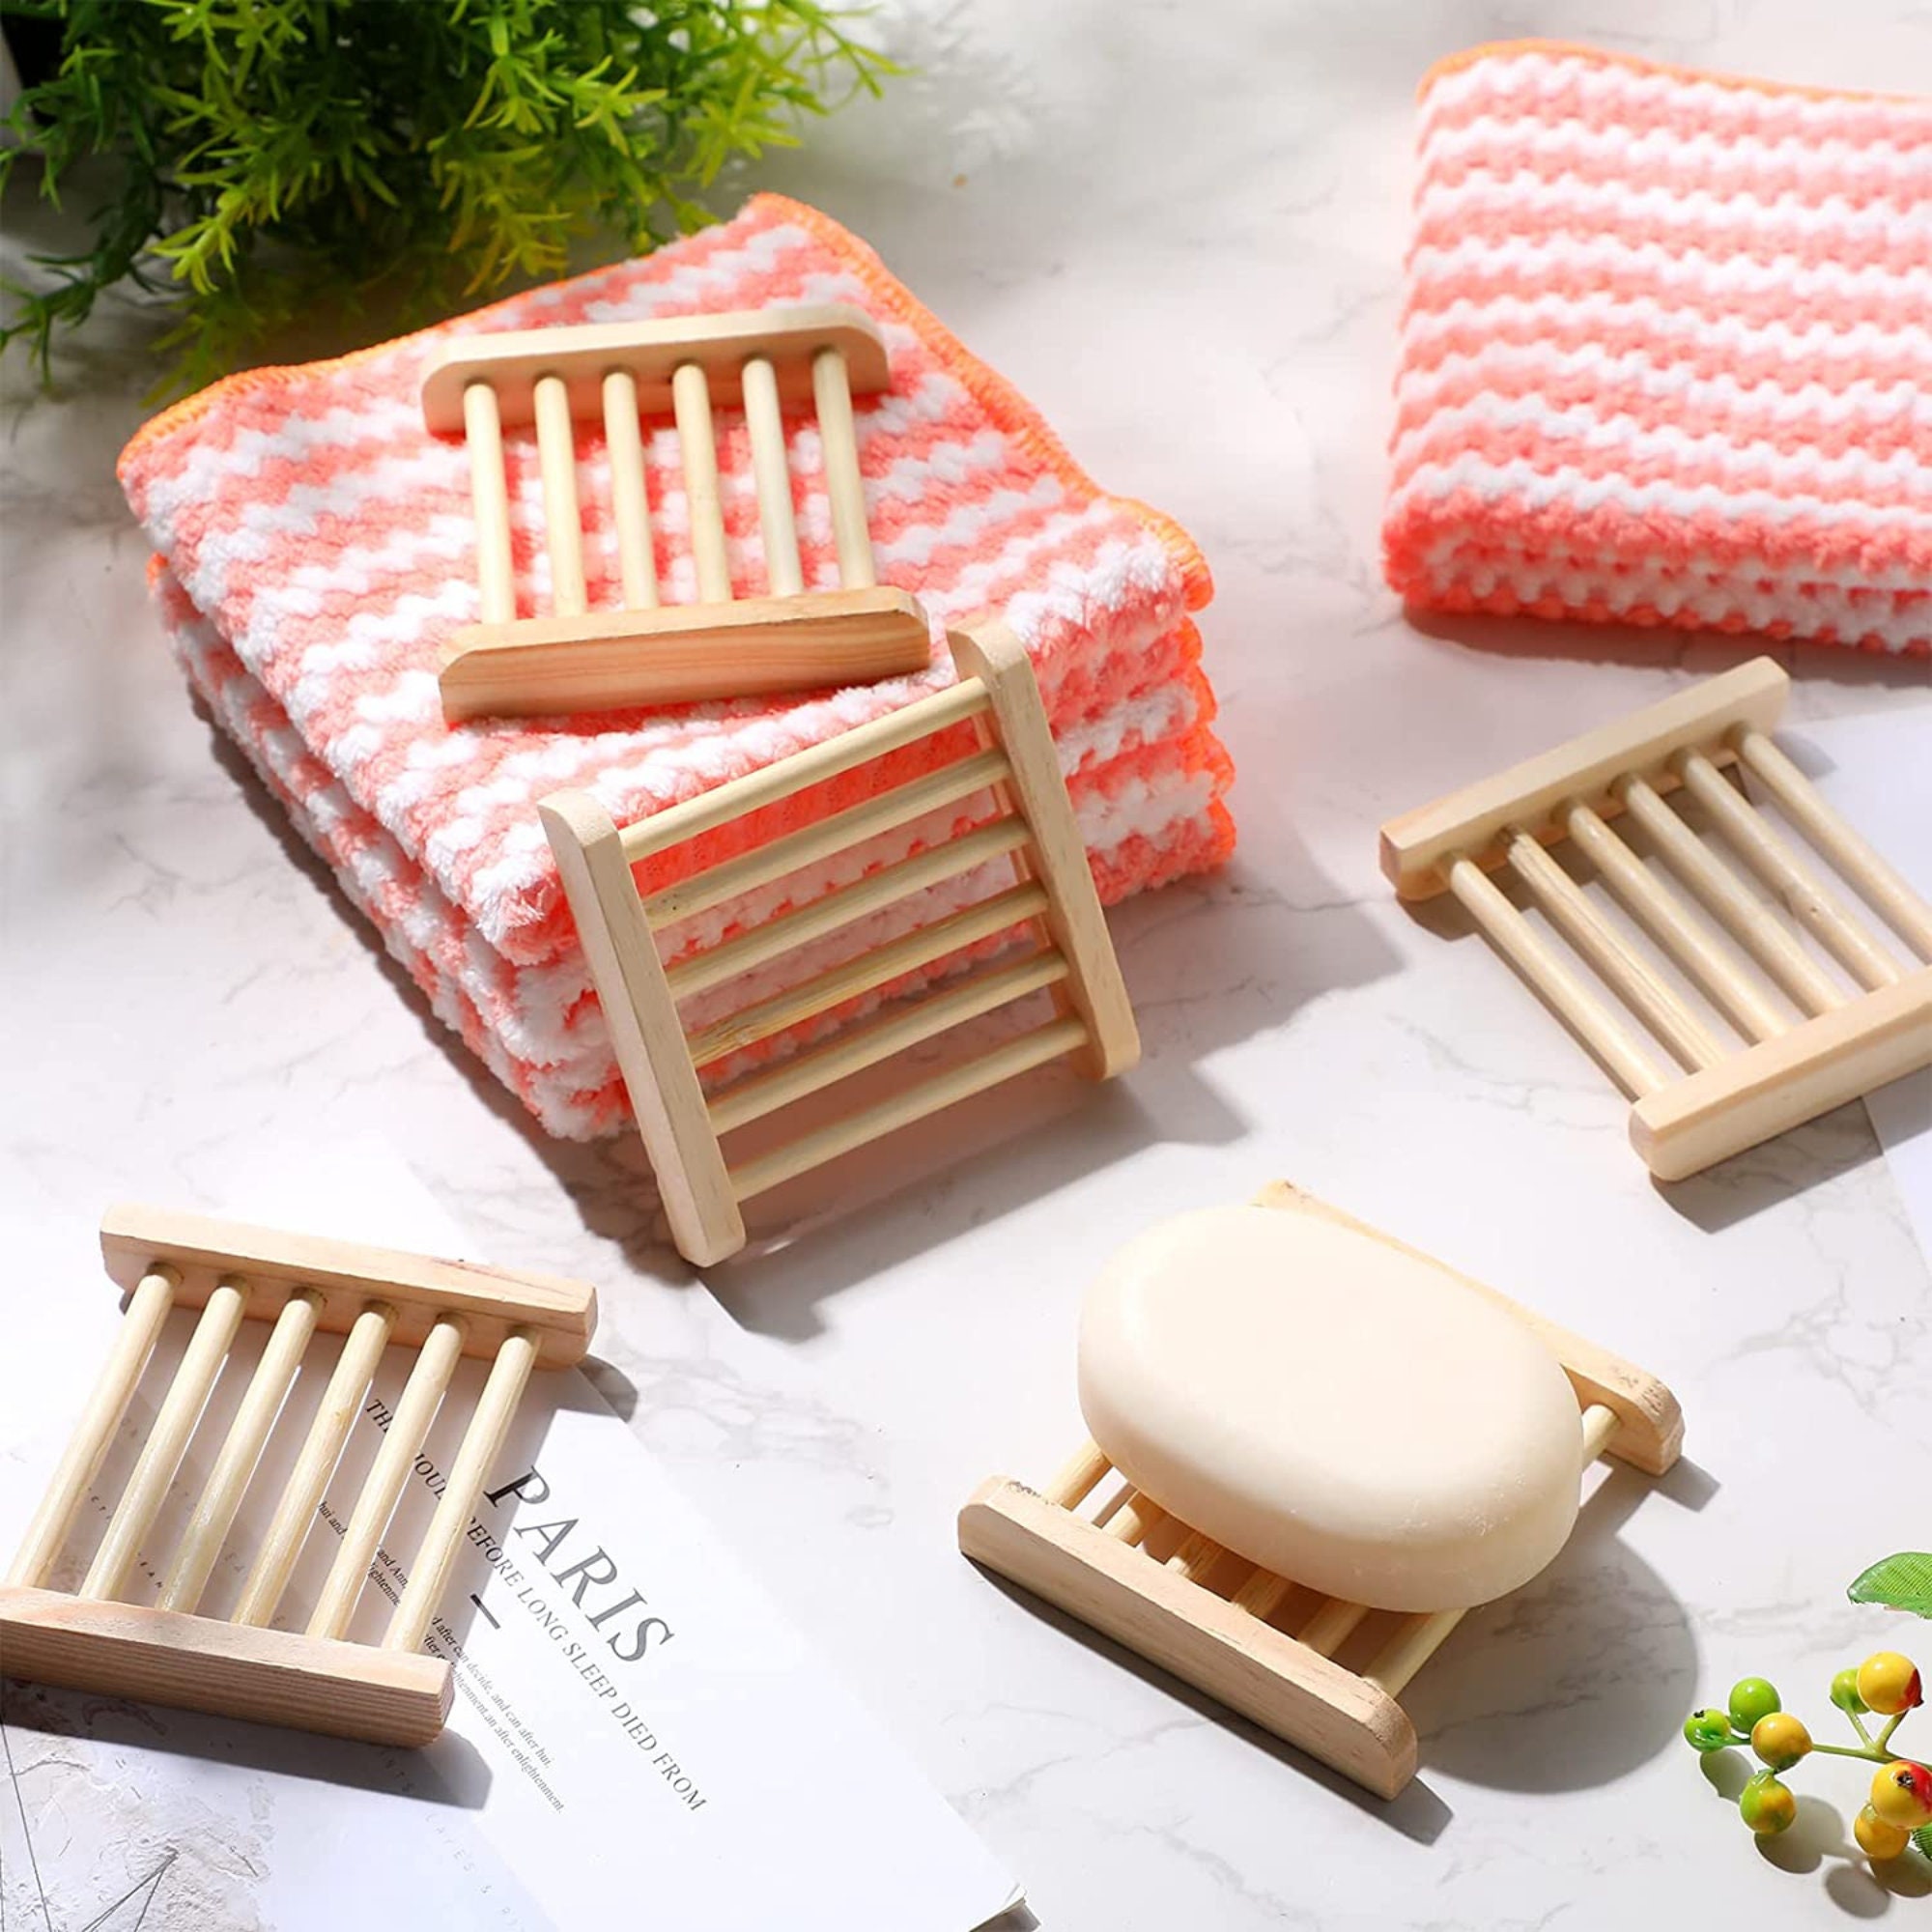 Waterdrop Presentation Box Large · Storage Box · Made of High-Quality Bamboo